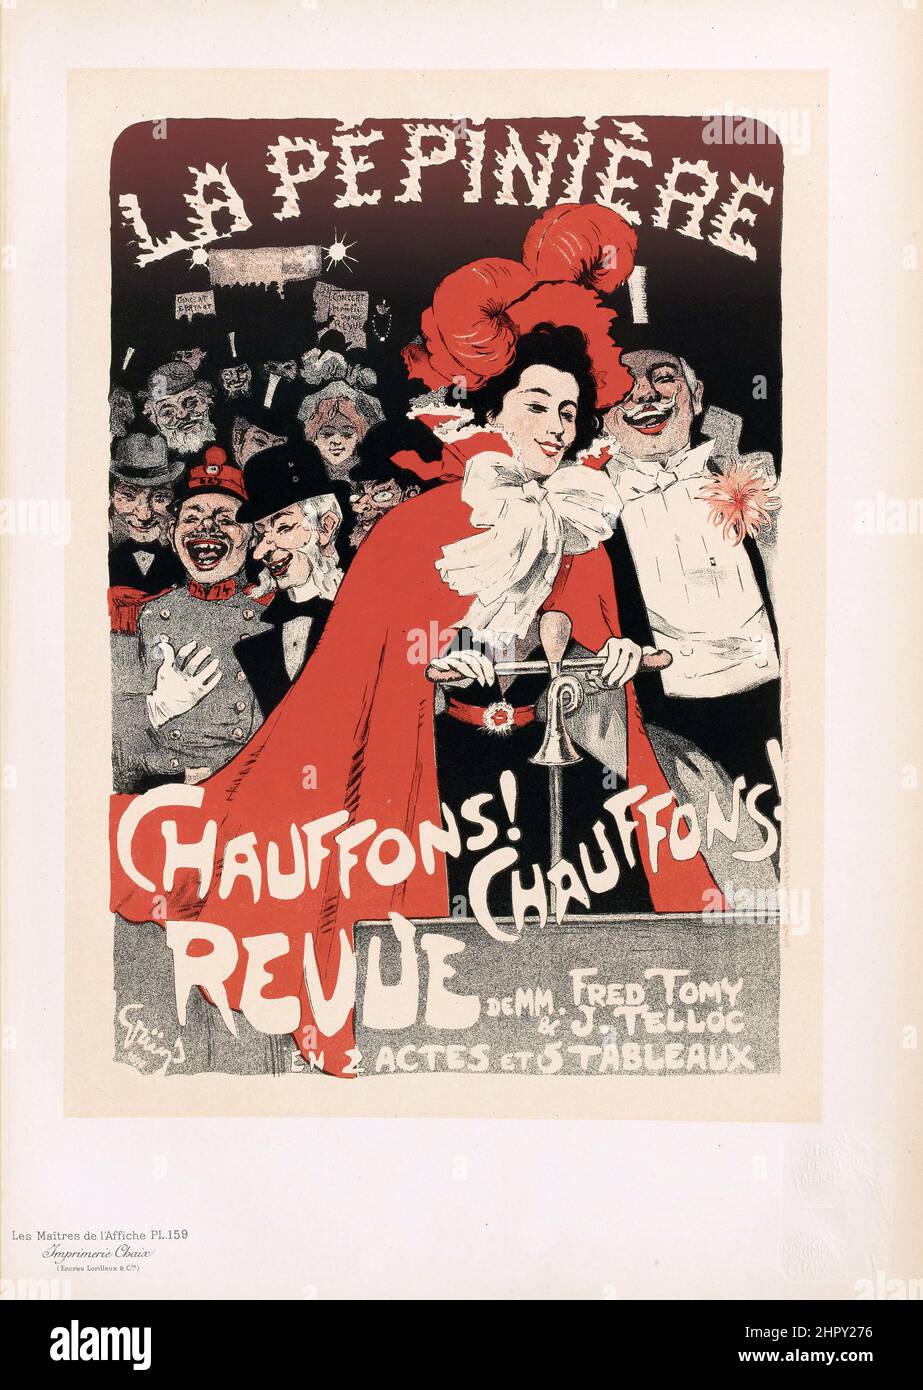 Maitres de l'affiche Vol 4 - Platte 159 - Jules-Alexandre Grün - La Pepiniere, Chauffons, Revue. Theaterposter. 1895. Stockfoto